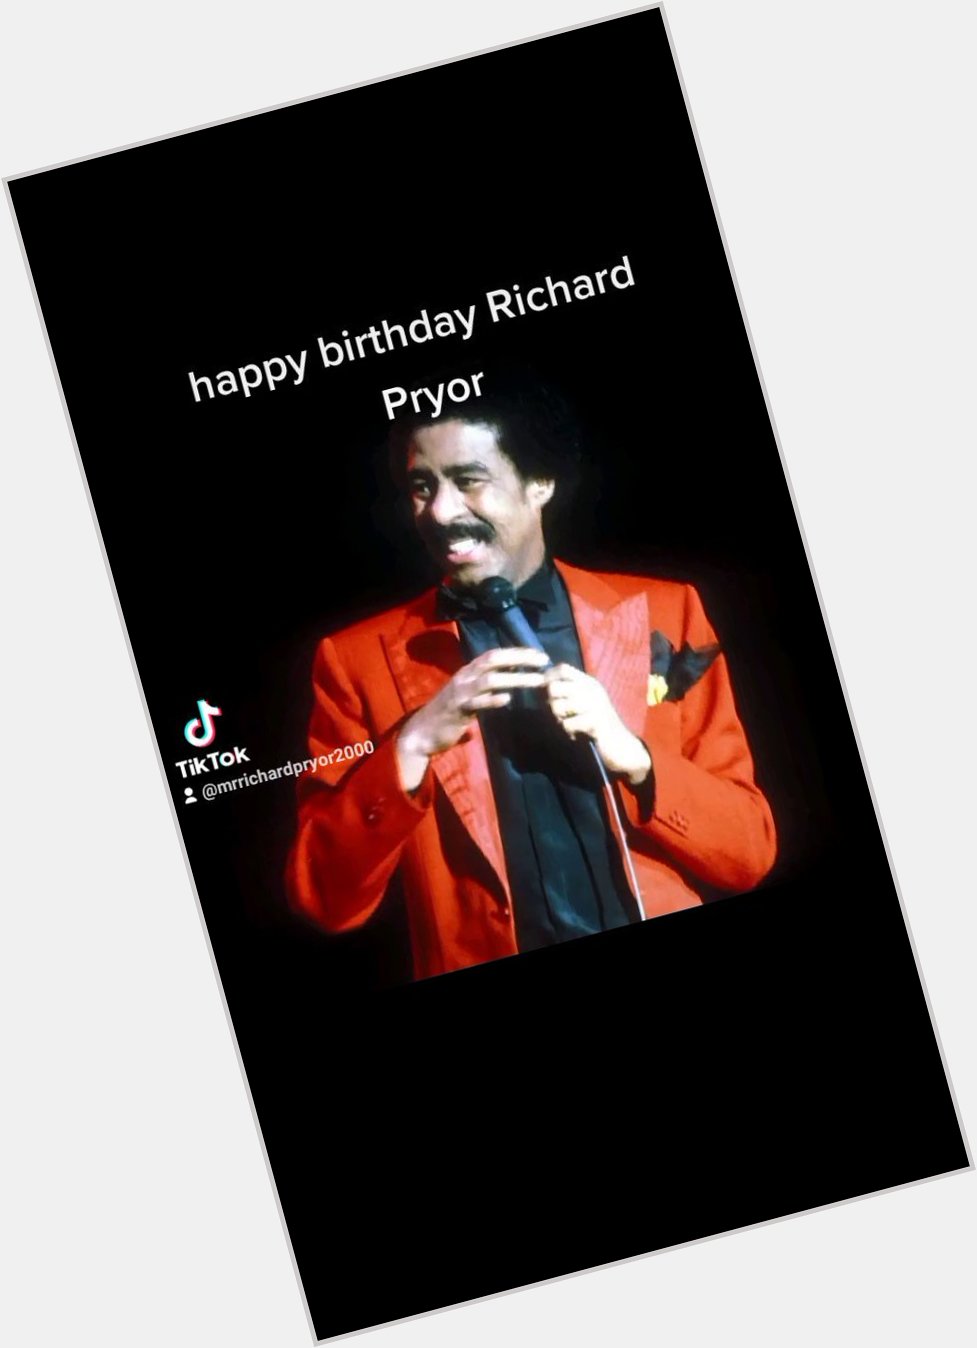 Happy birthday Richard Pryor 